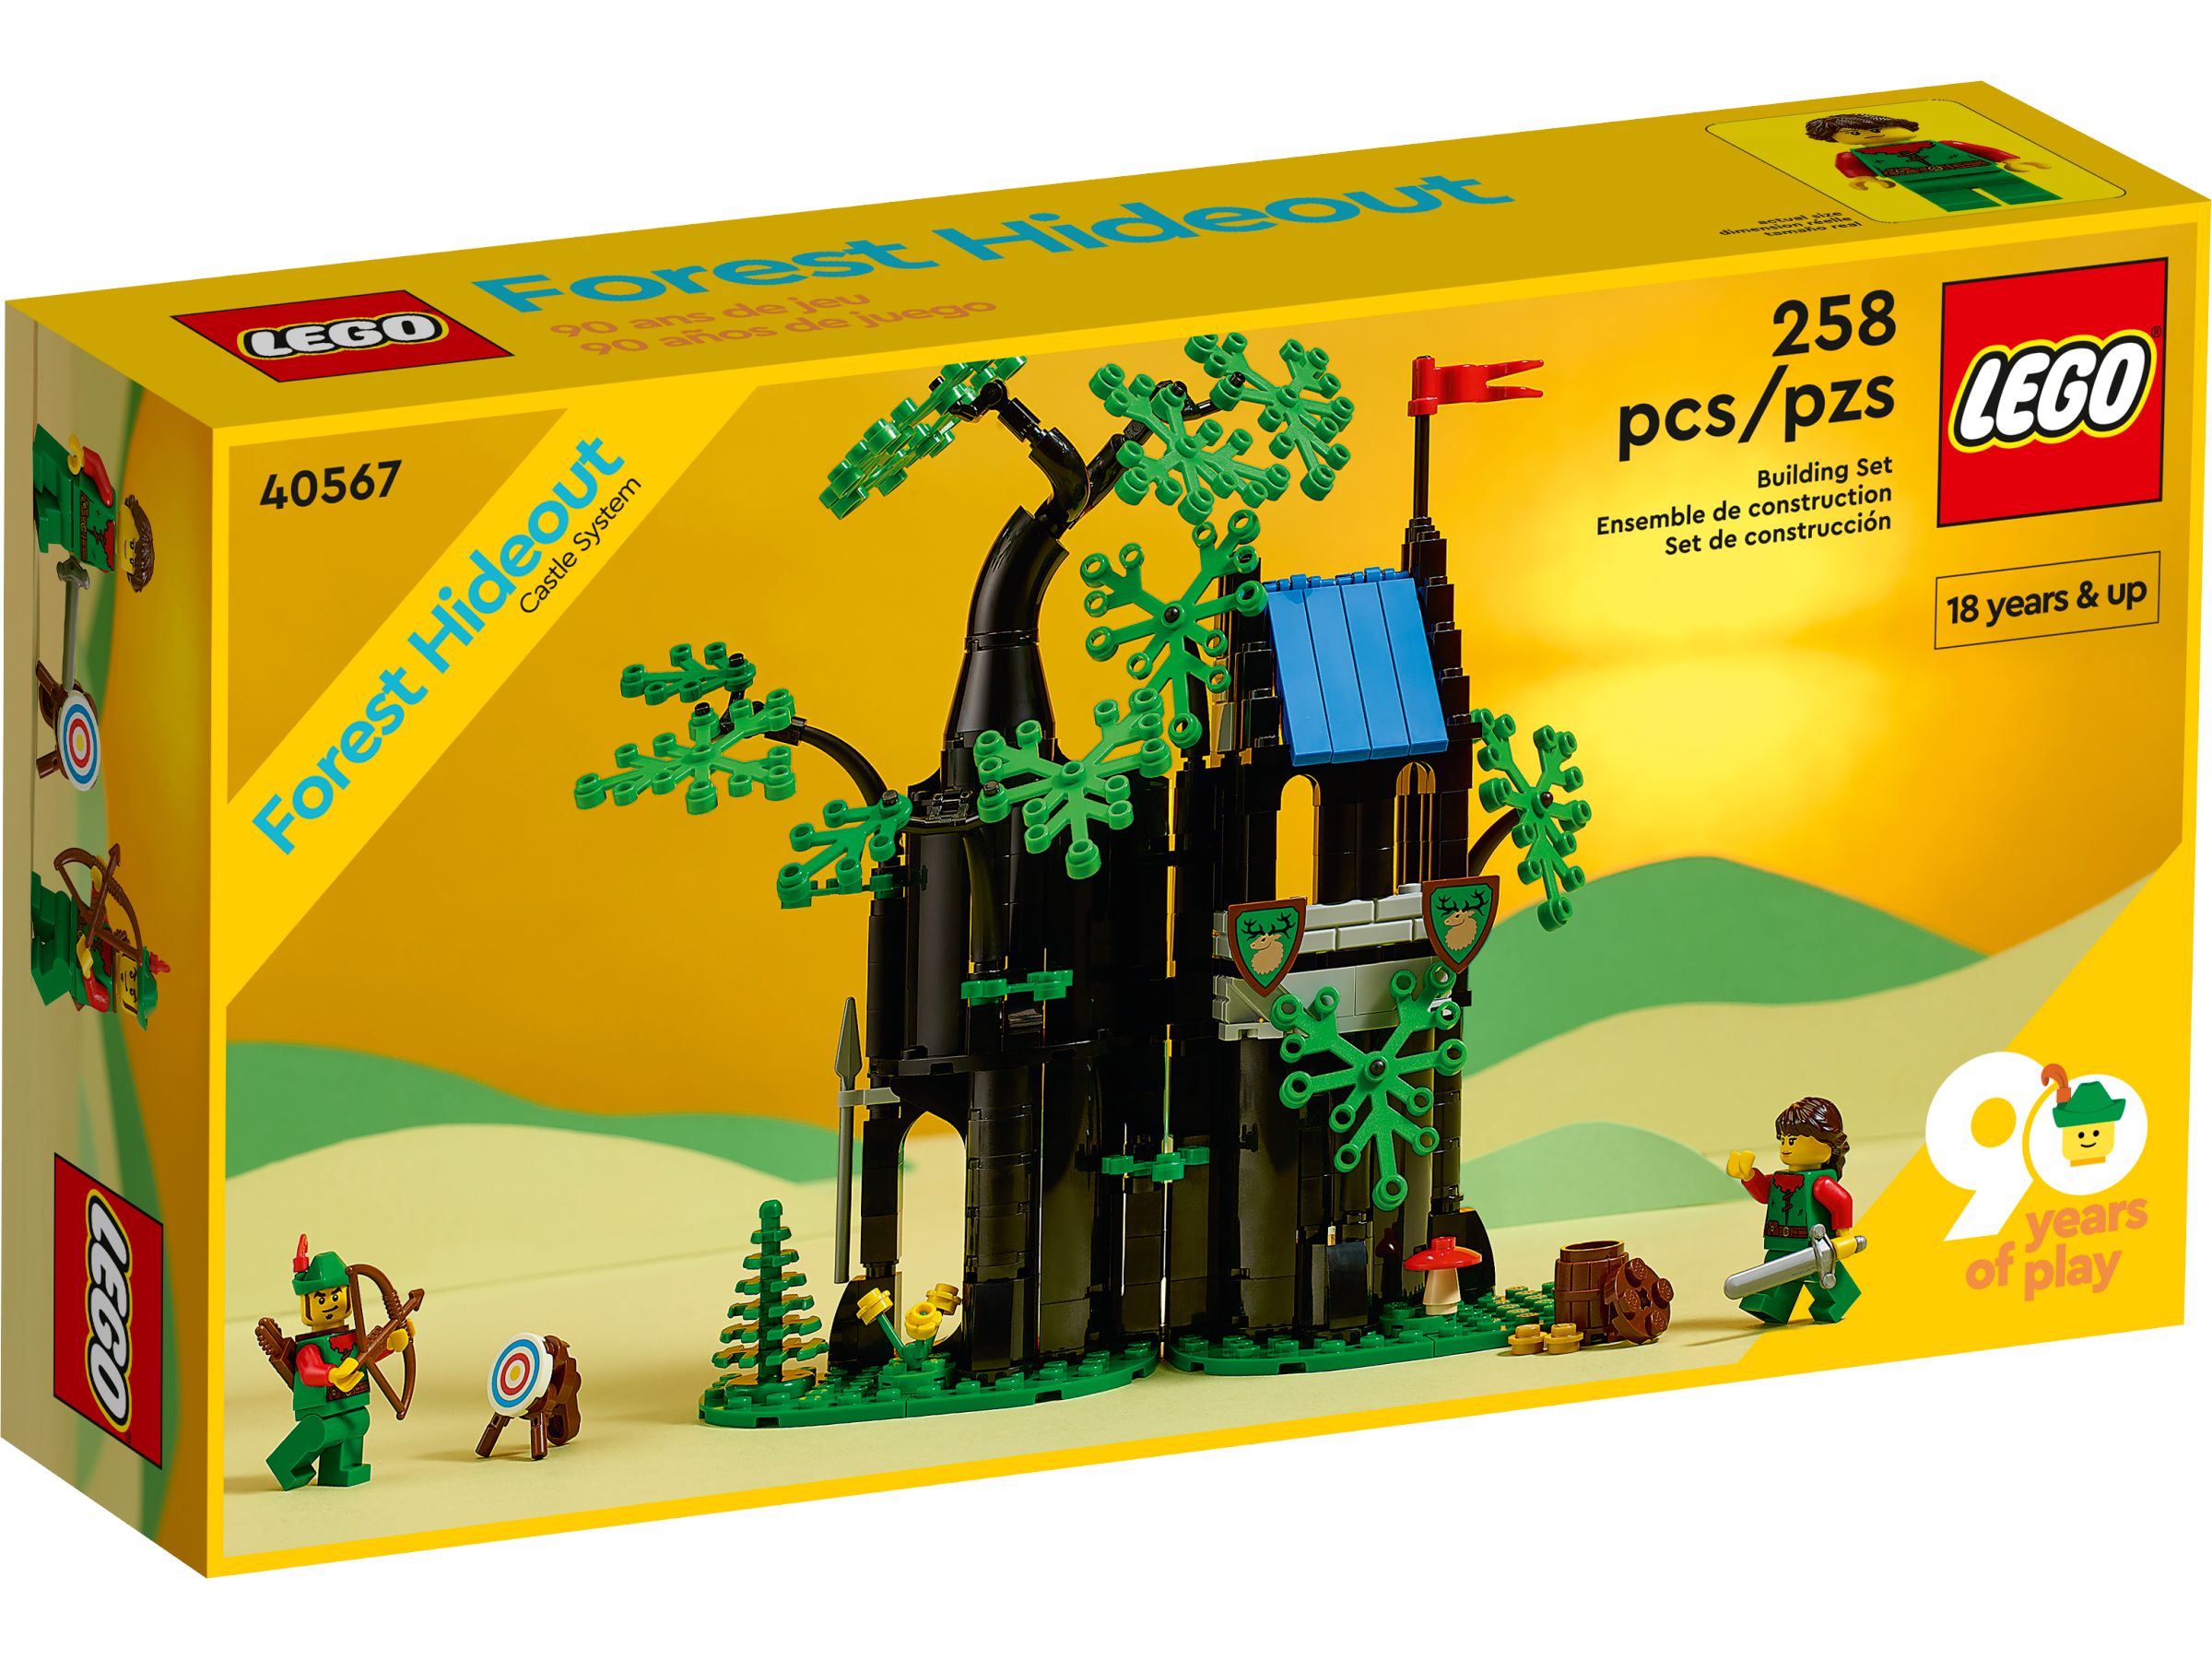 LEGO Promotional 40567 Versteck im Wald LEGO_40567_alt1.jpg